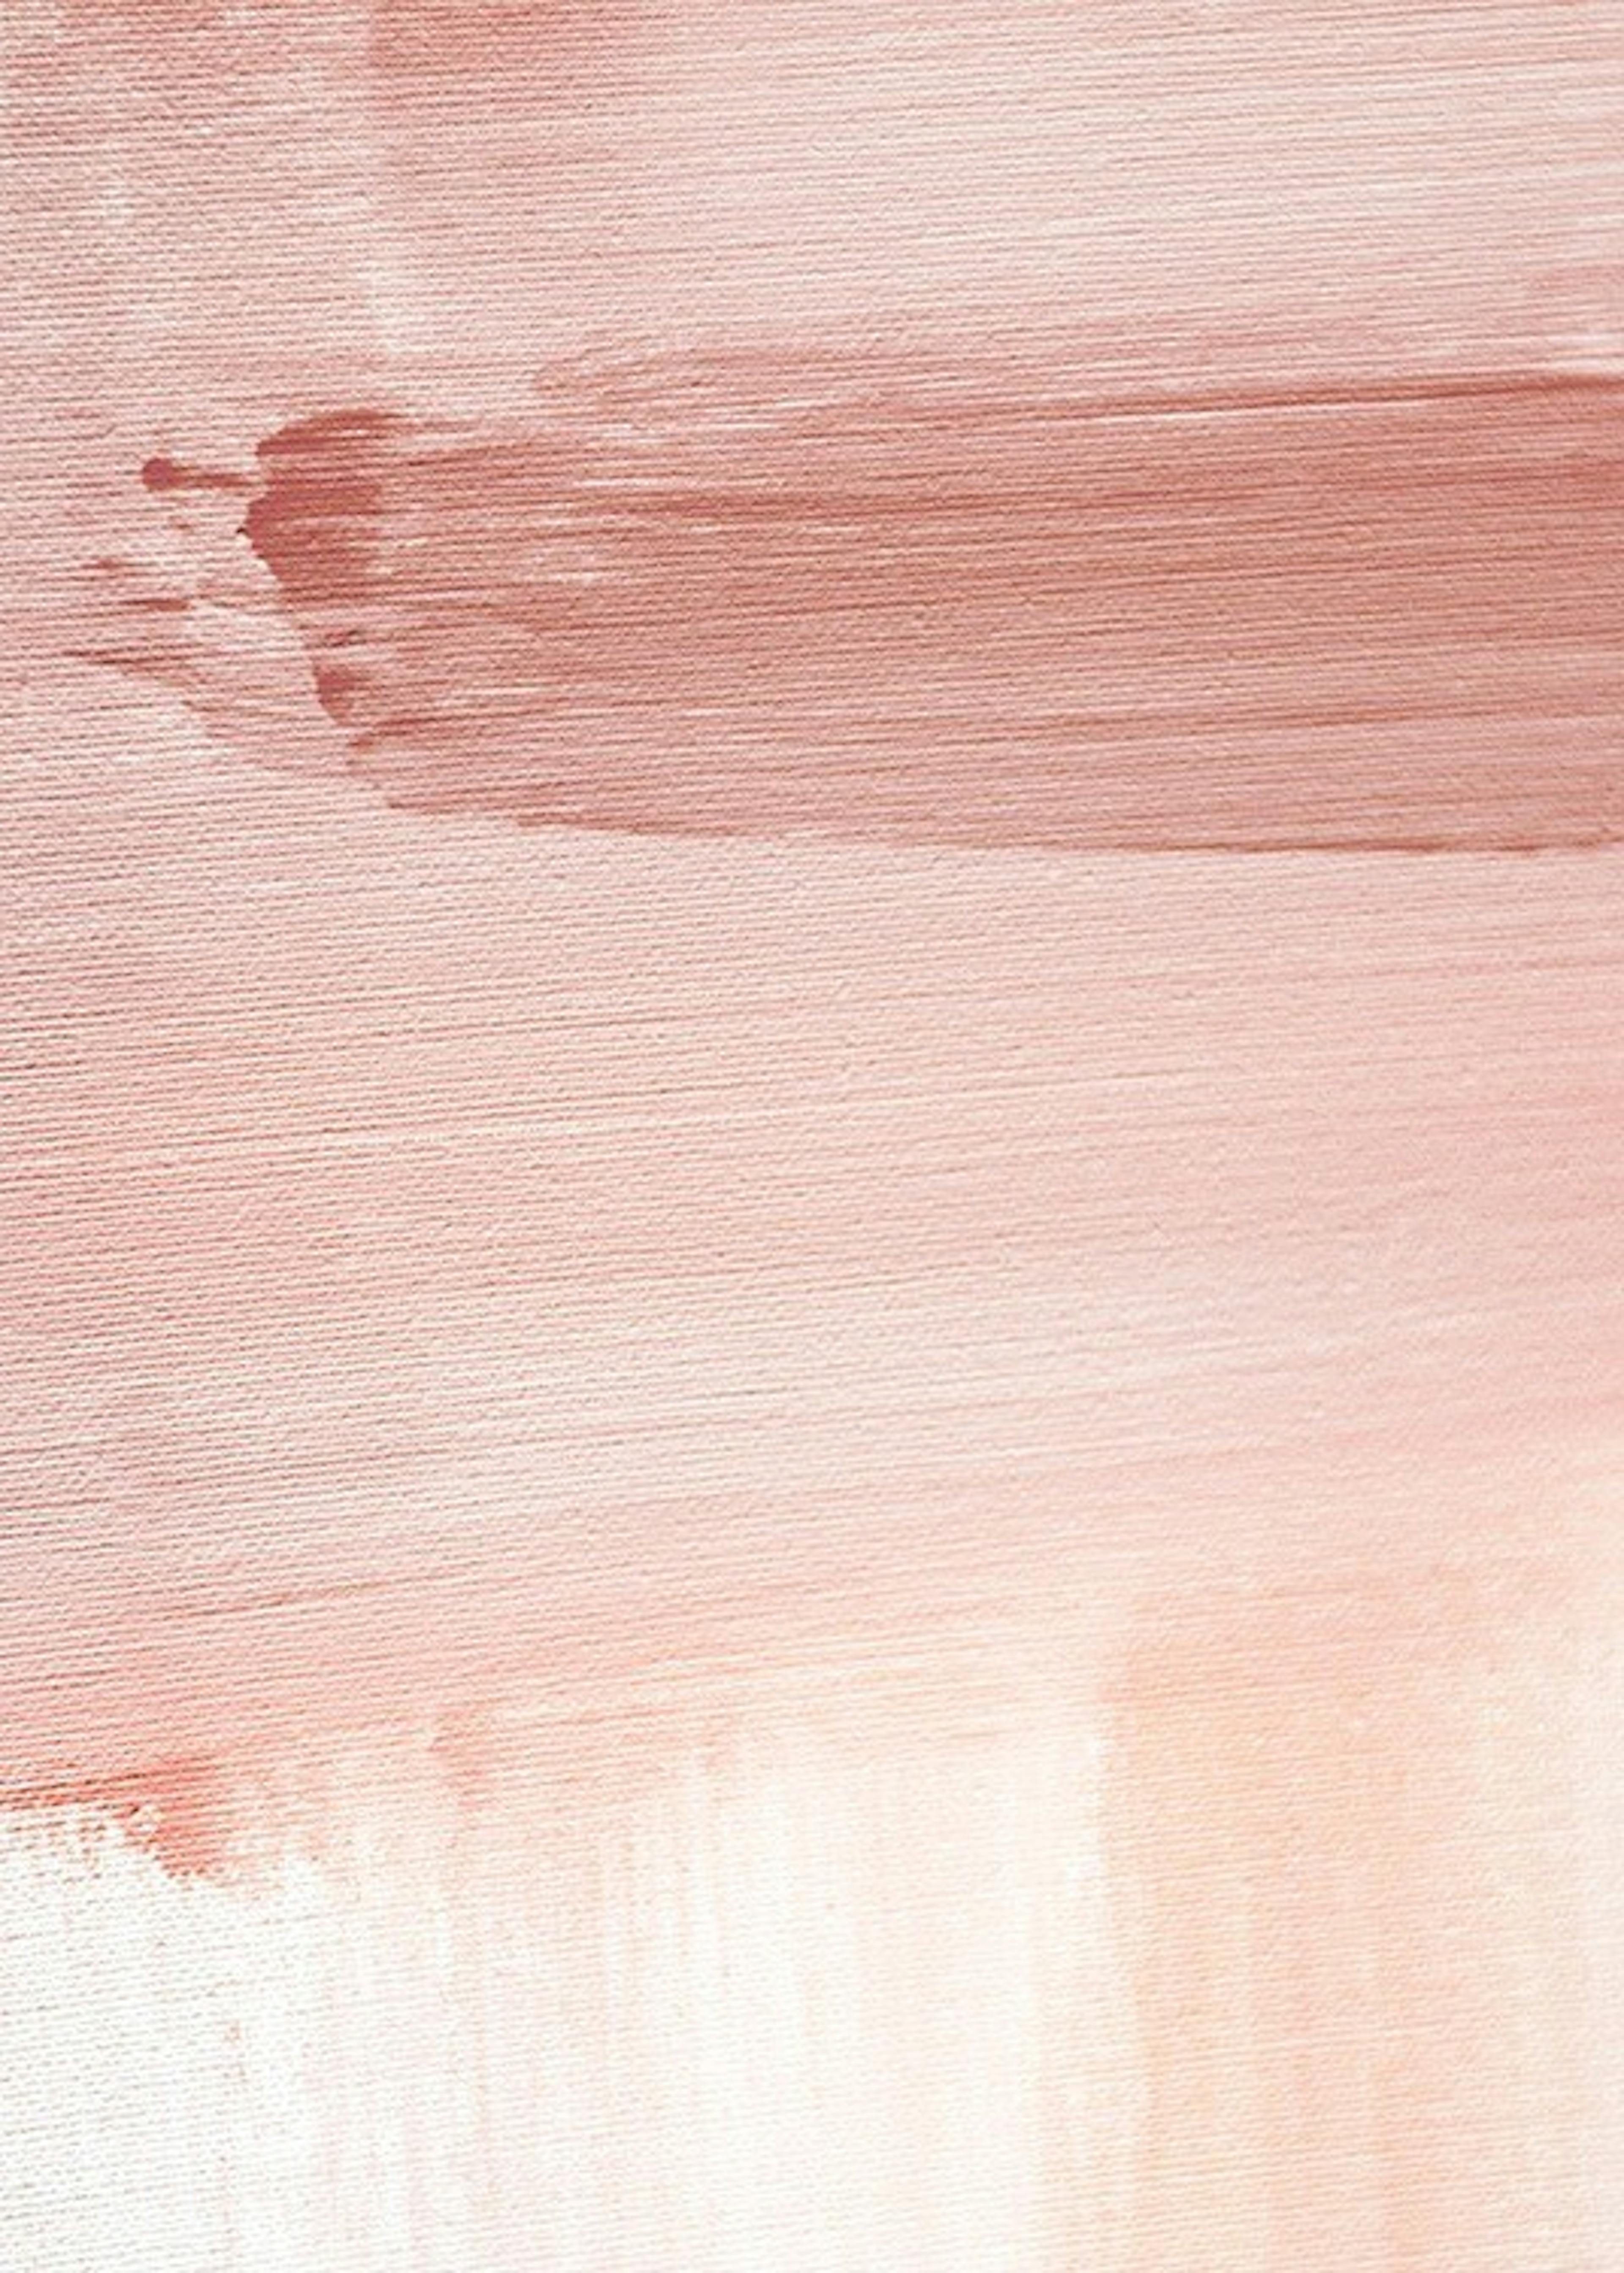 Abstract Painting Pink No1 Print 0